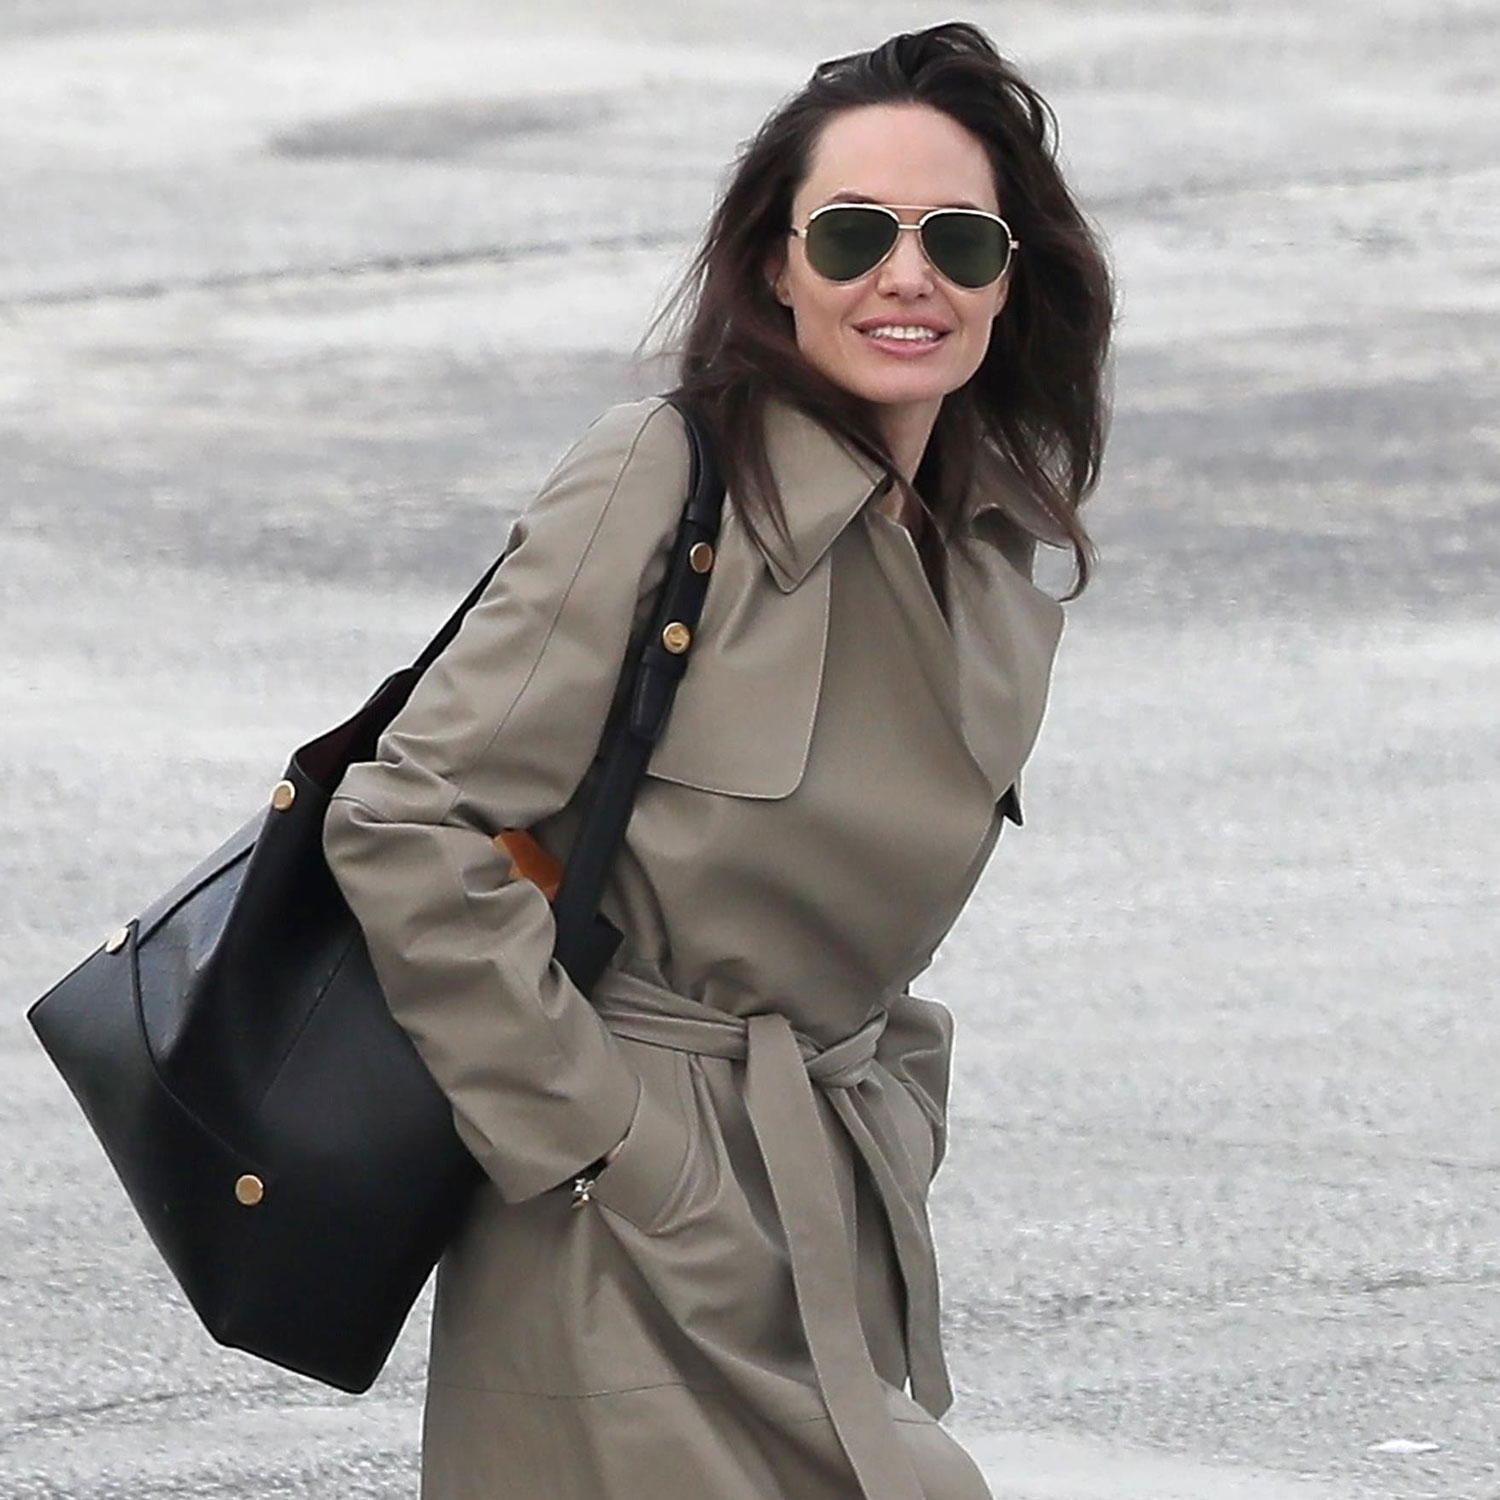 Angelina Jolie Wore Chic Pajamas to the Airport